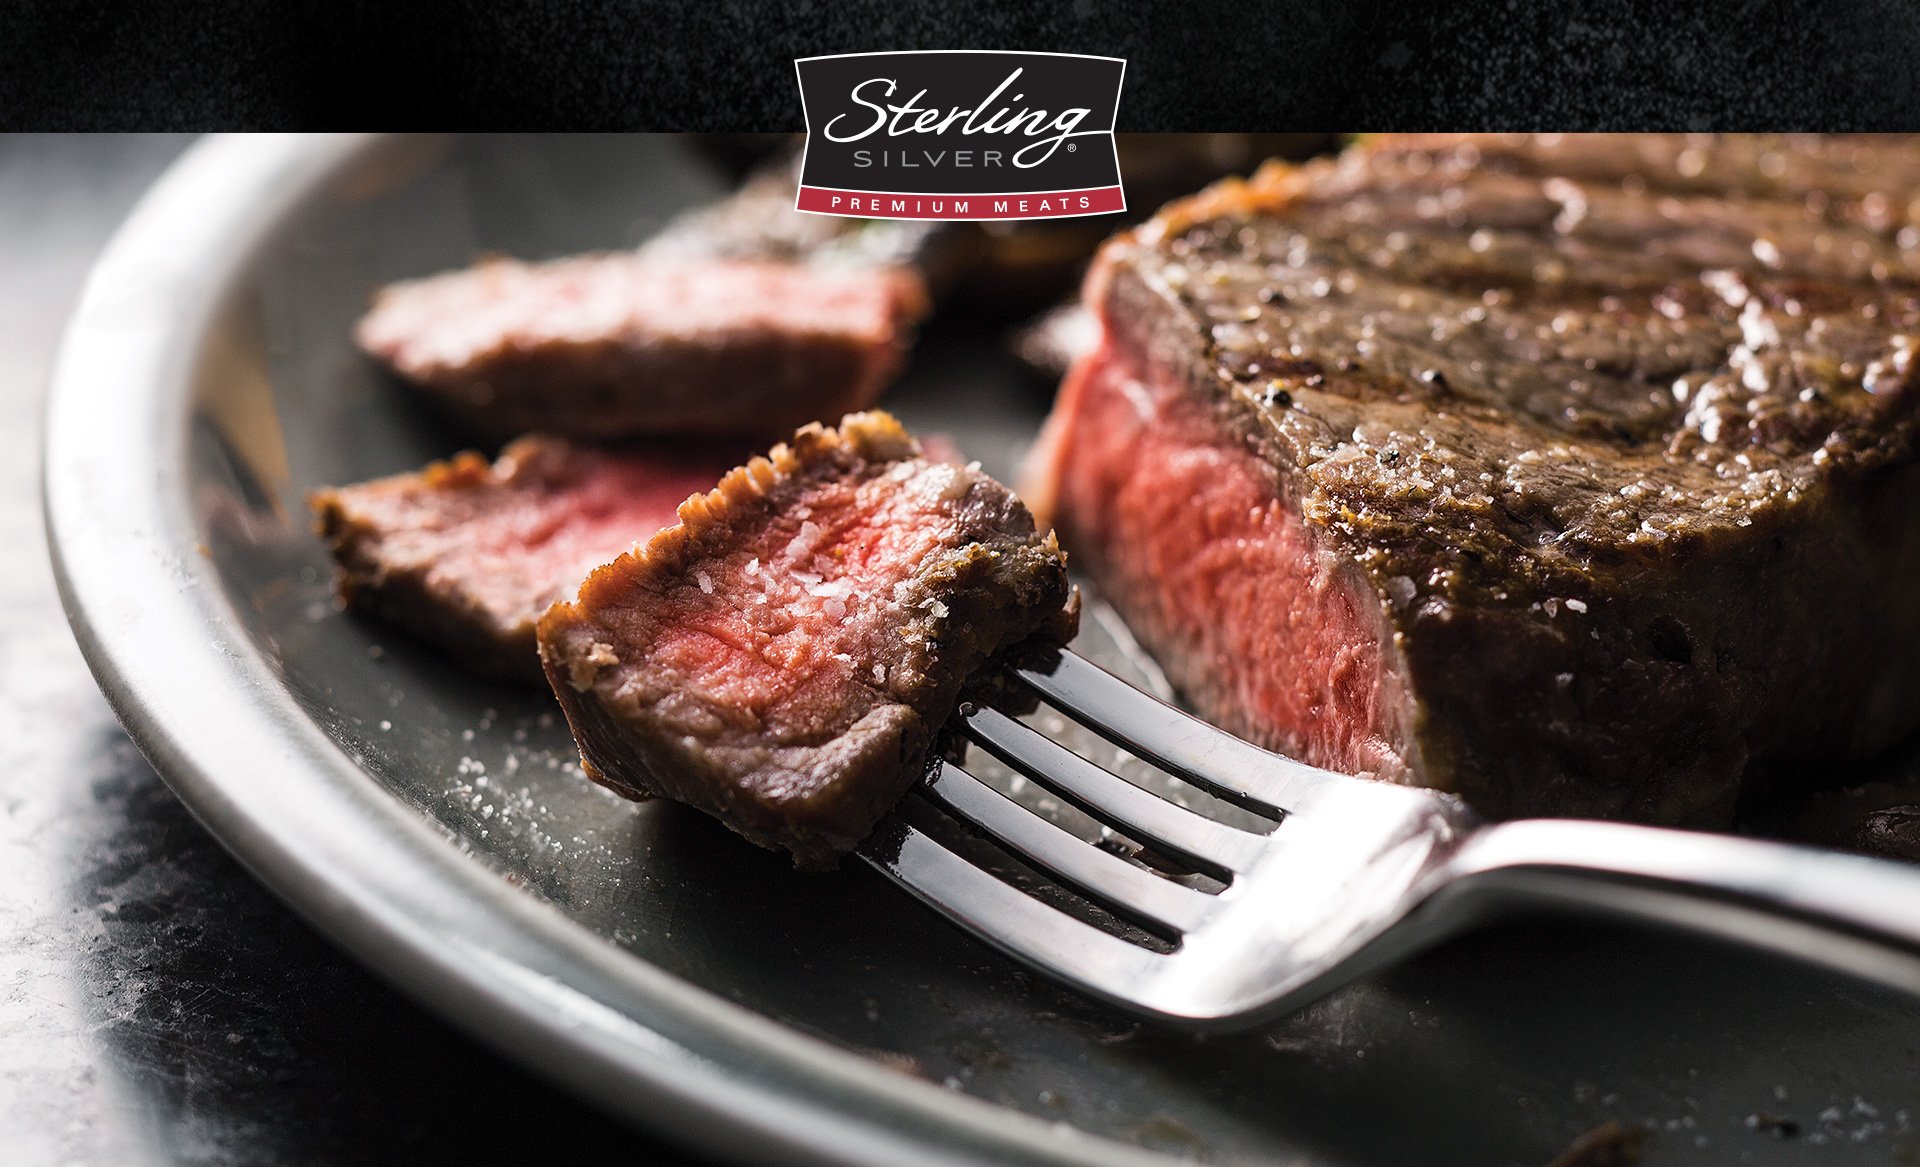 Close up image of cut steak on fork